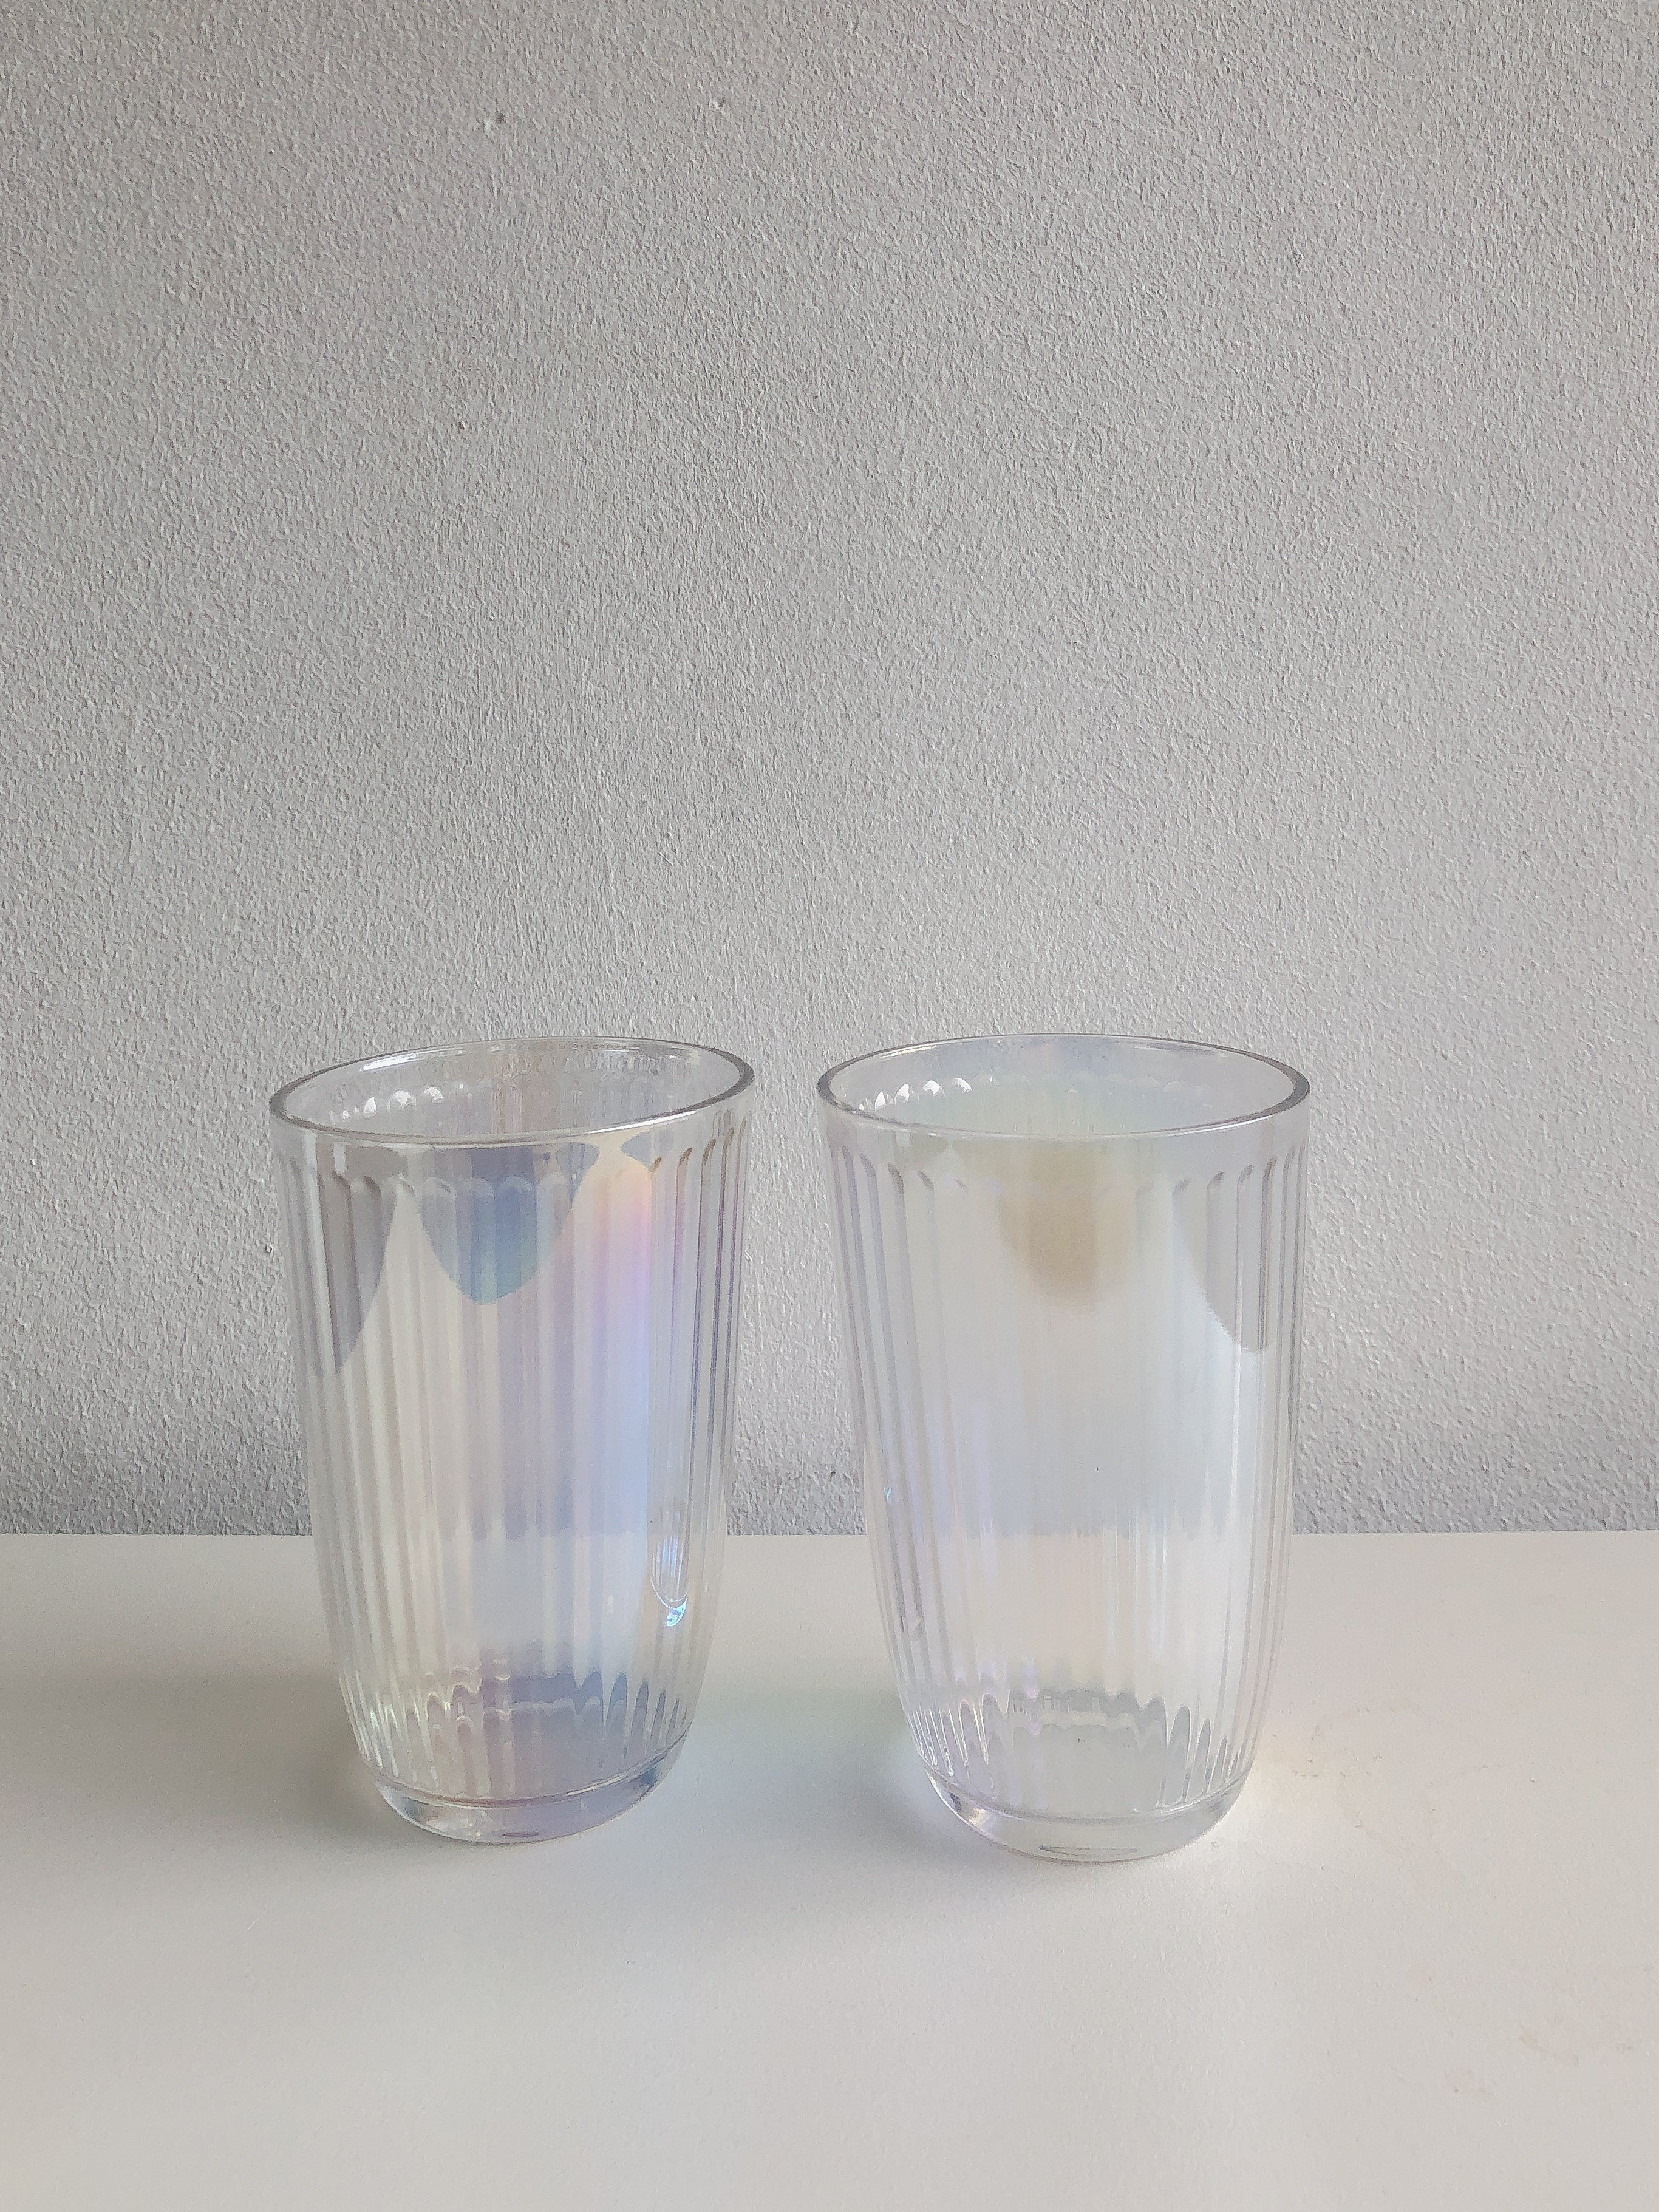 Iridescent Ripple Highball Glasses  by PROSE Tabletop